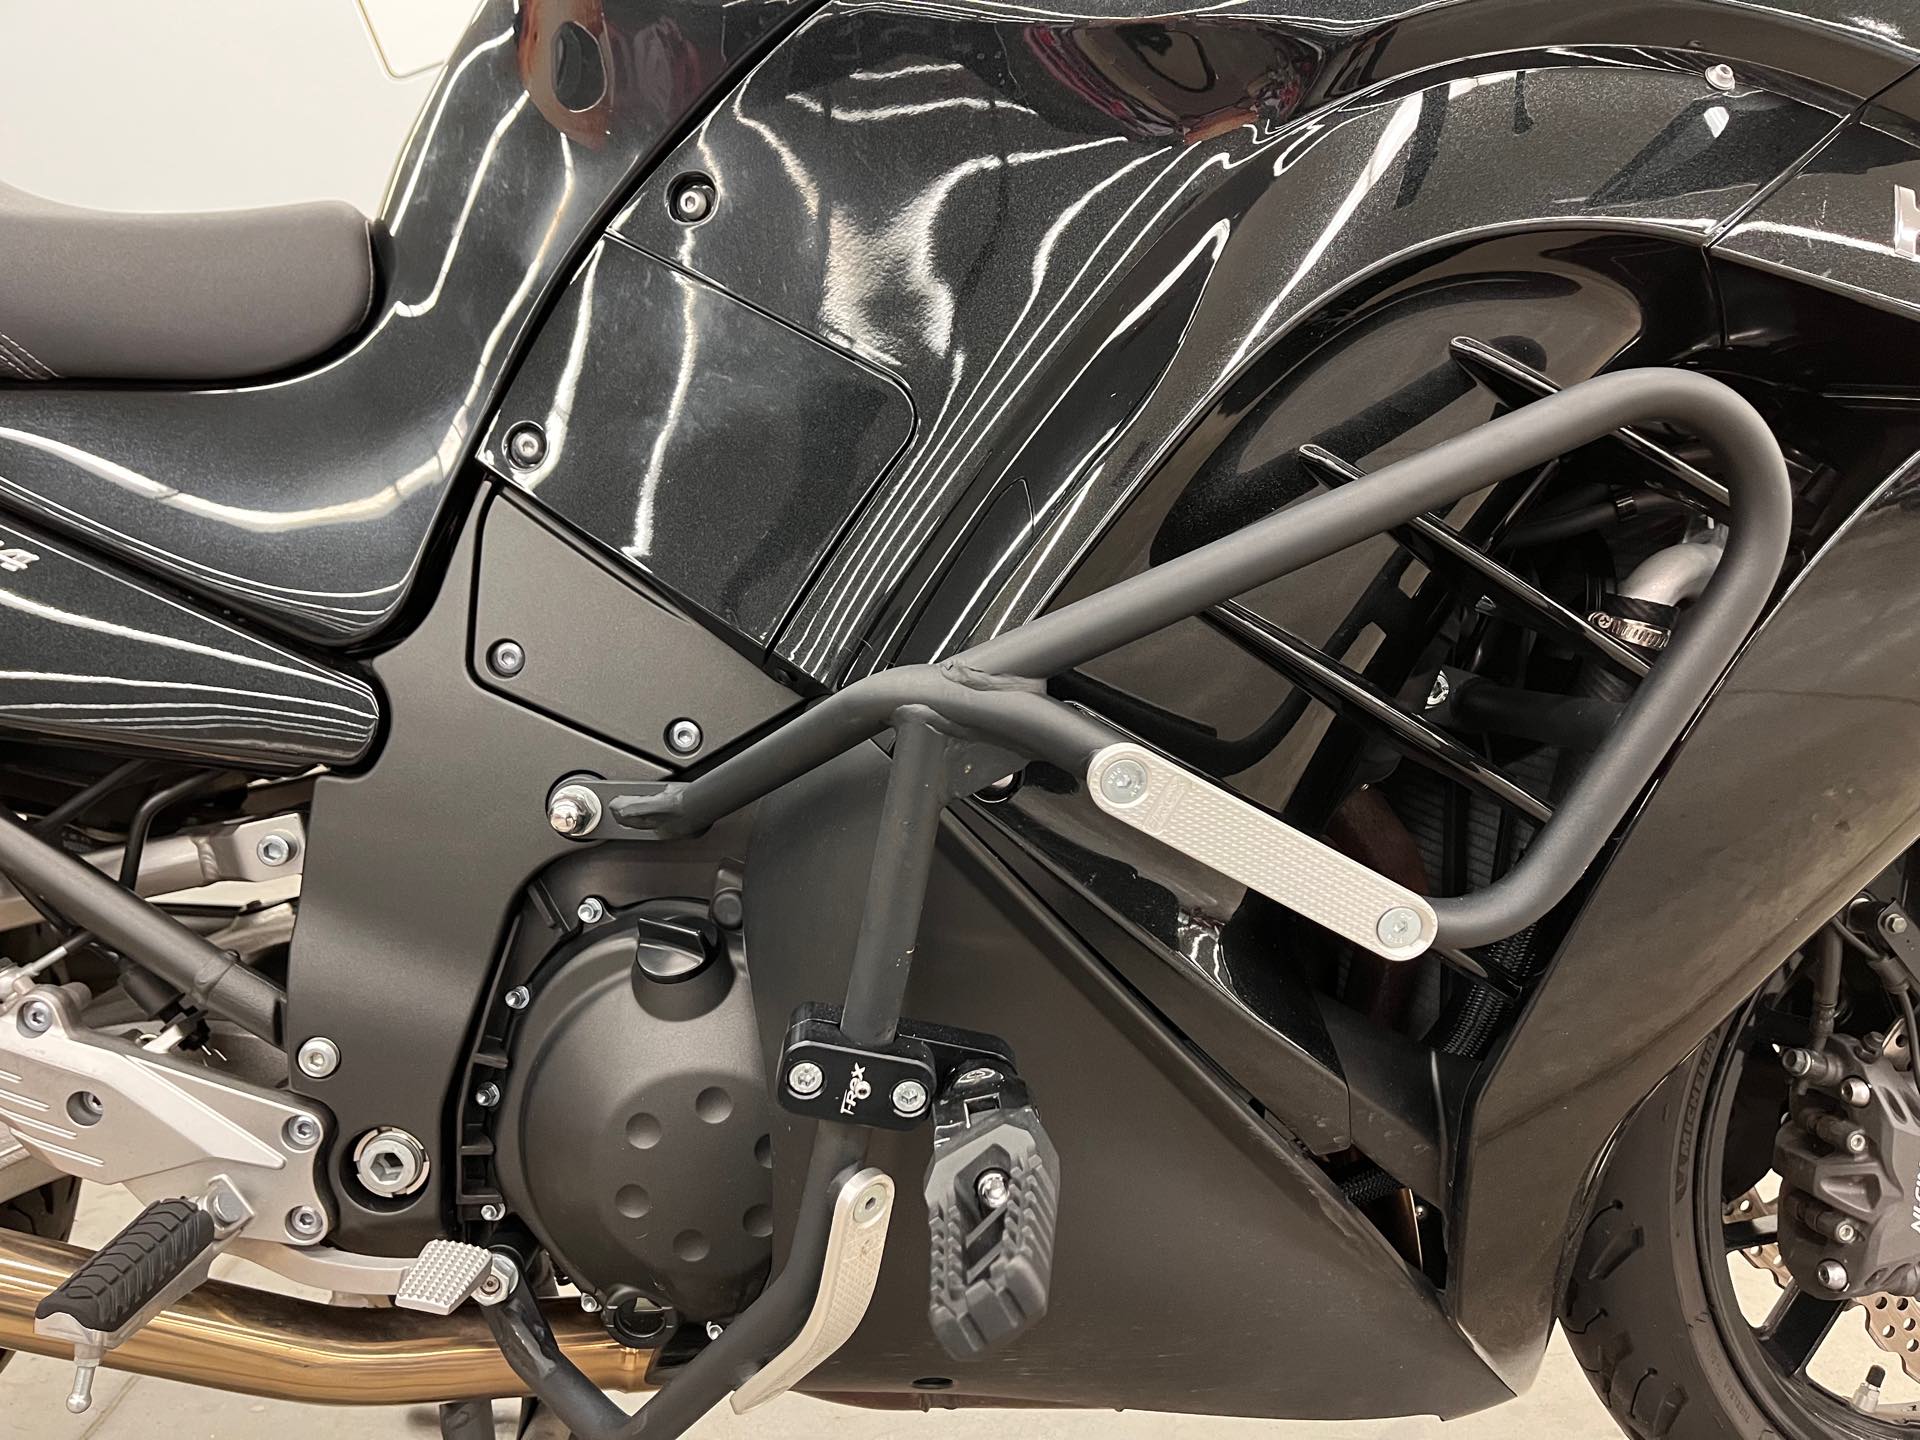 2015 Kawasaki Concours 14 ABS at Aces Motorcycles - Denver